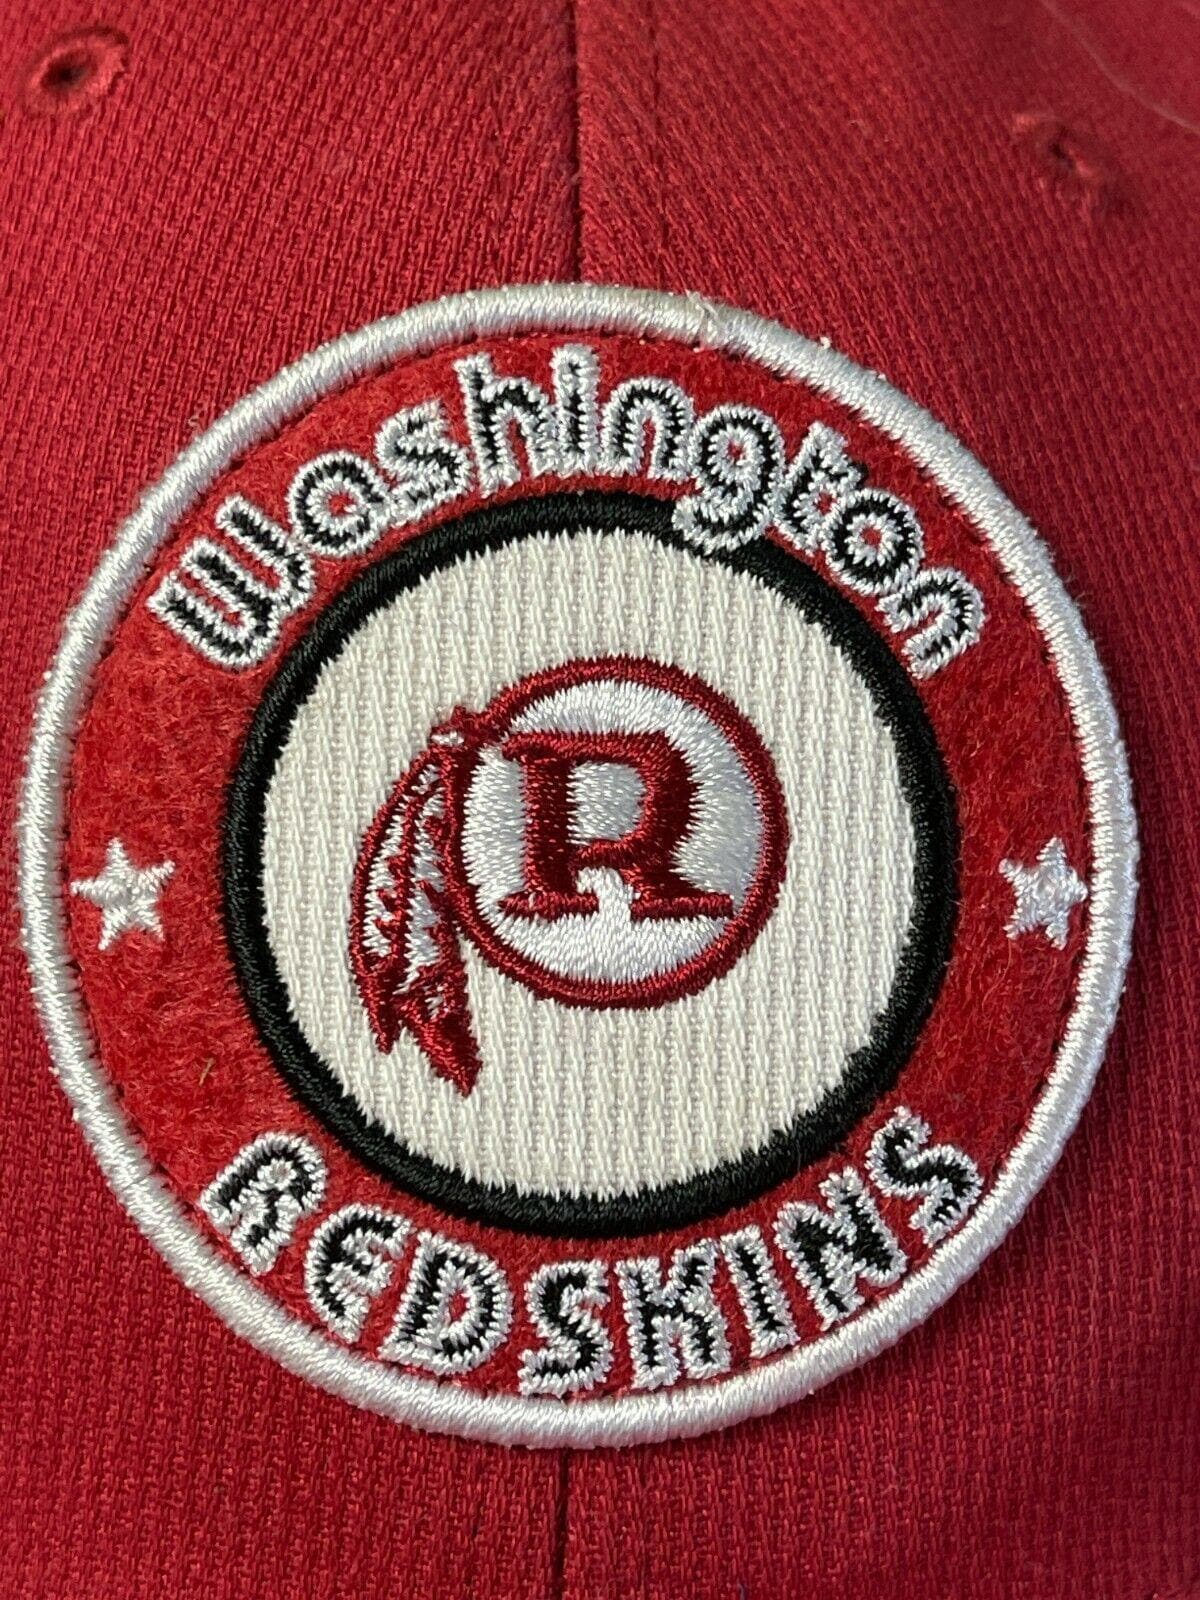 NFL Washington Commanders (Redskins) Reebok Vintage Hat/Cap OSFA